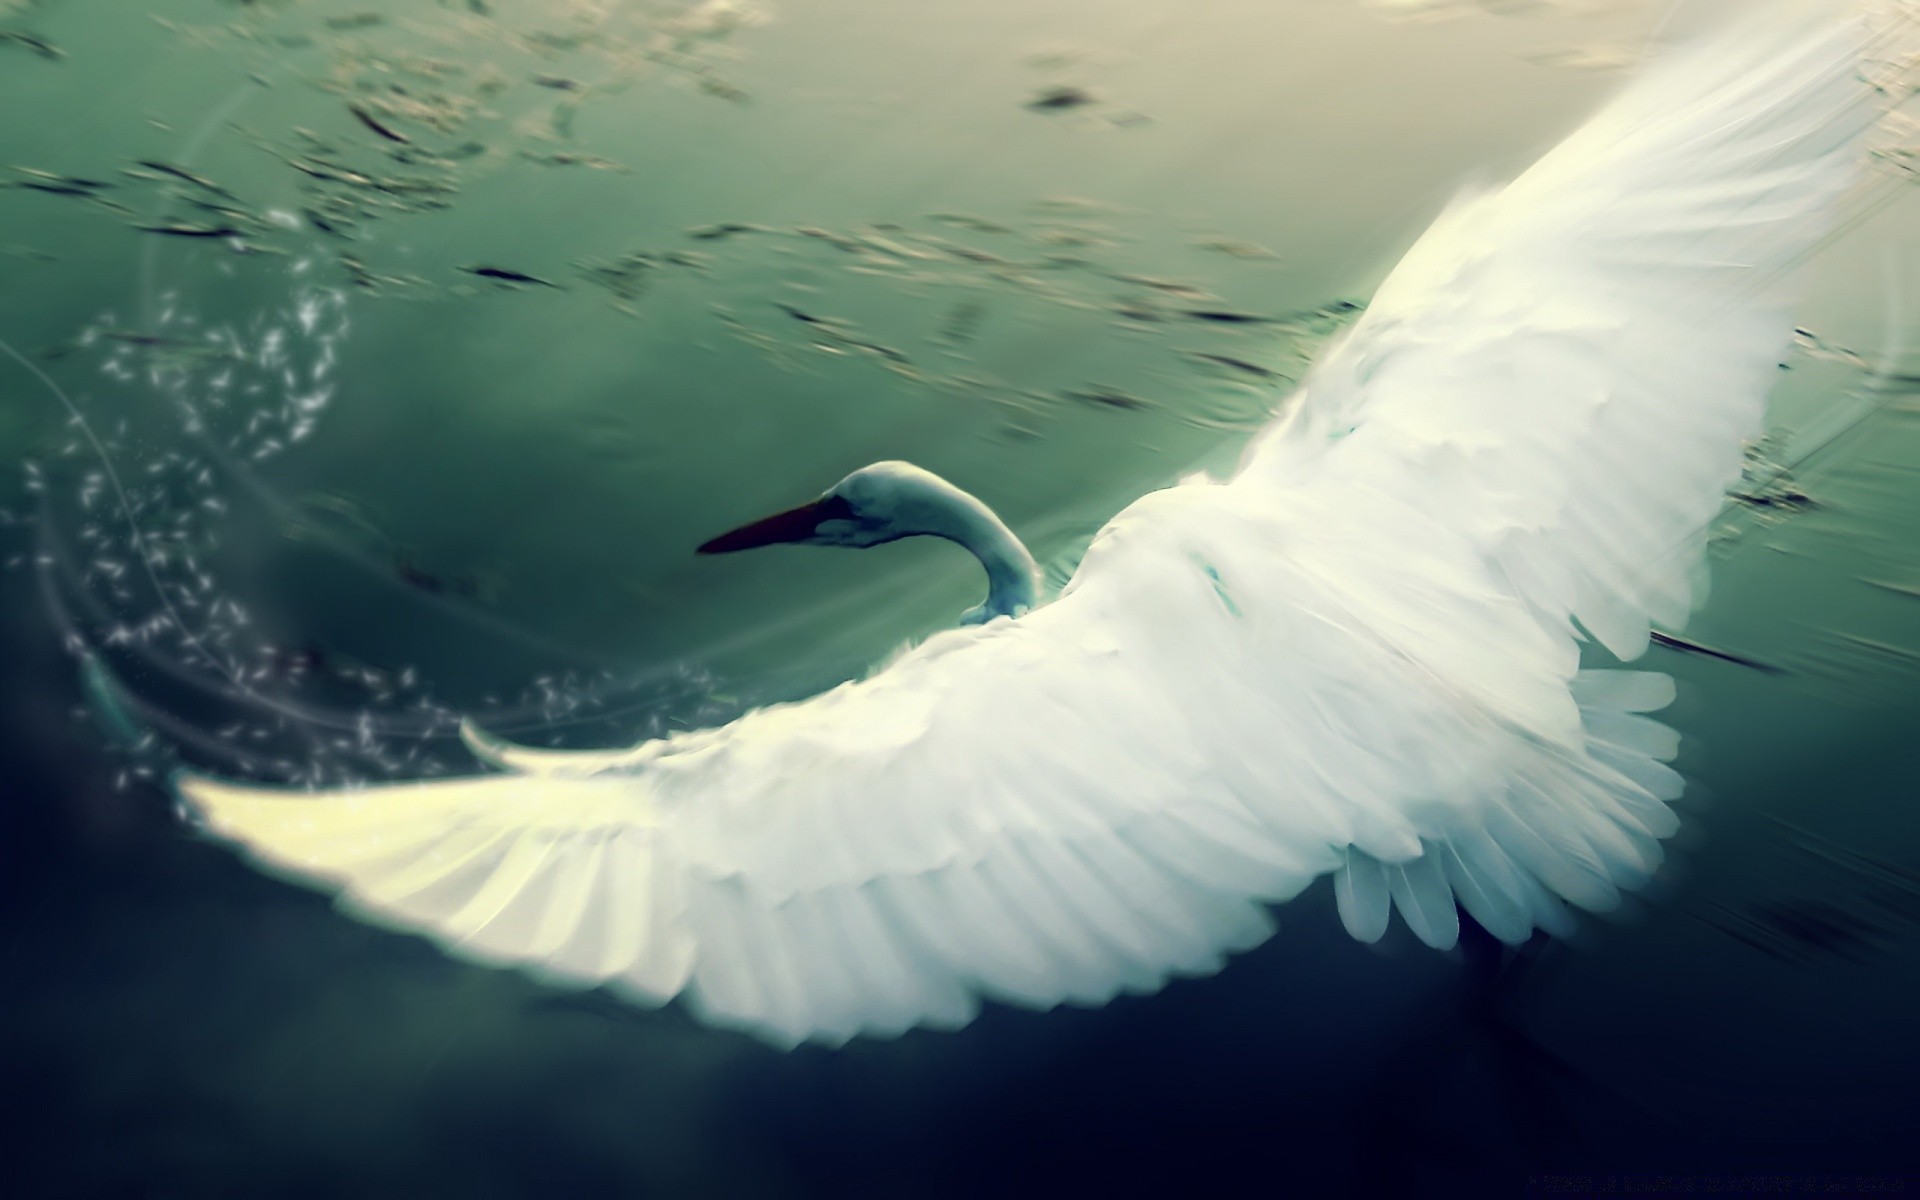 creative bird water underwater ocean sea wildlife nature fish flight fly animal swan